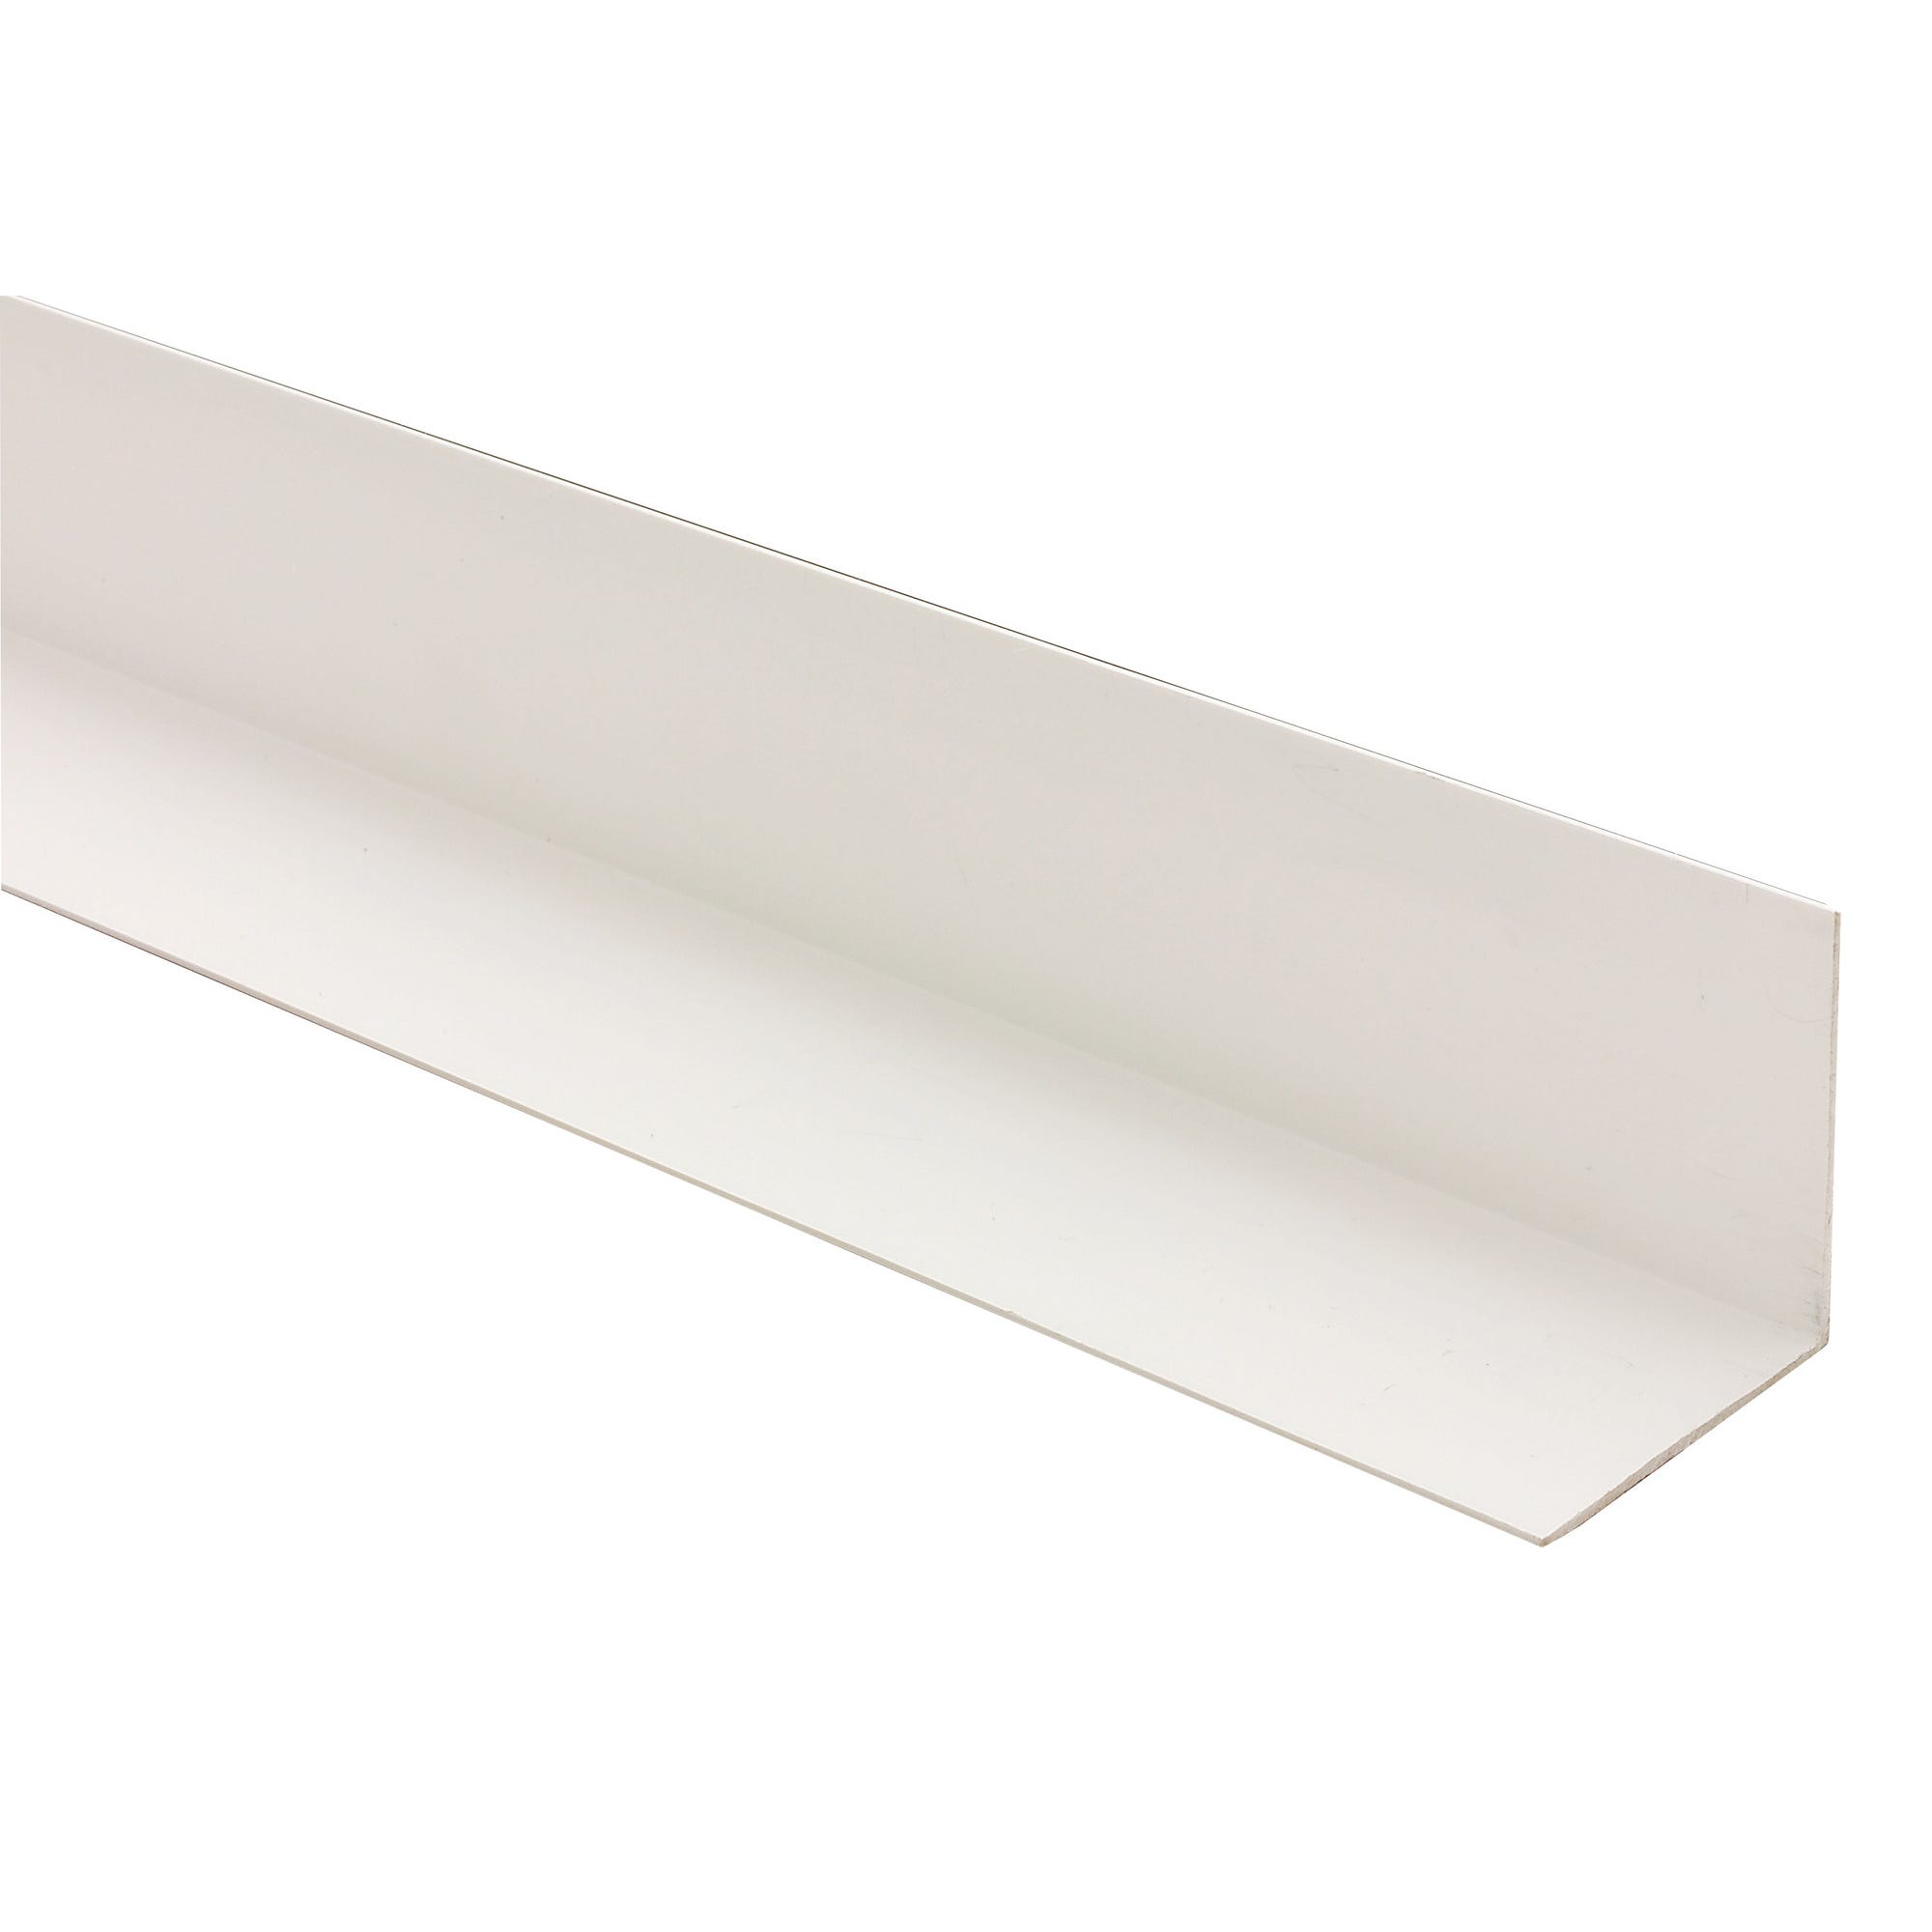 Cornière PVC blanc 60 x 60 mm L.260 cm 1